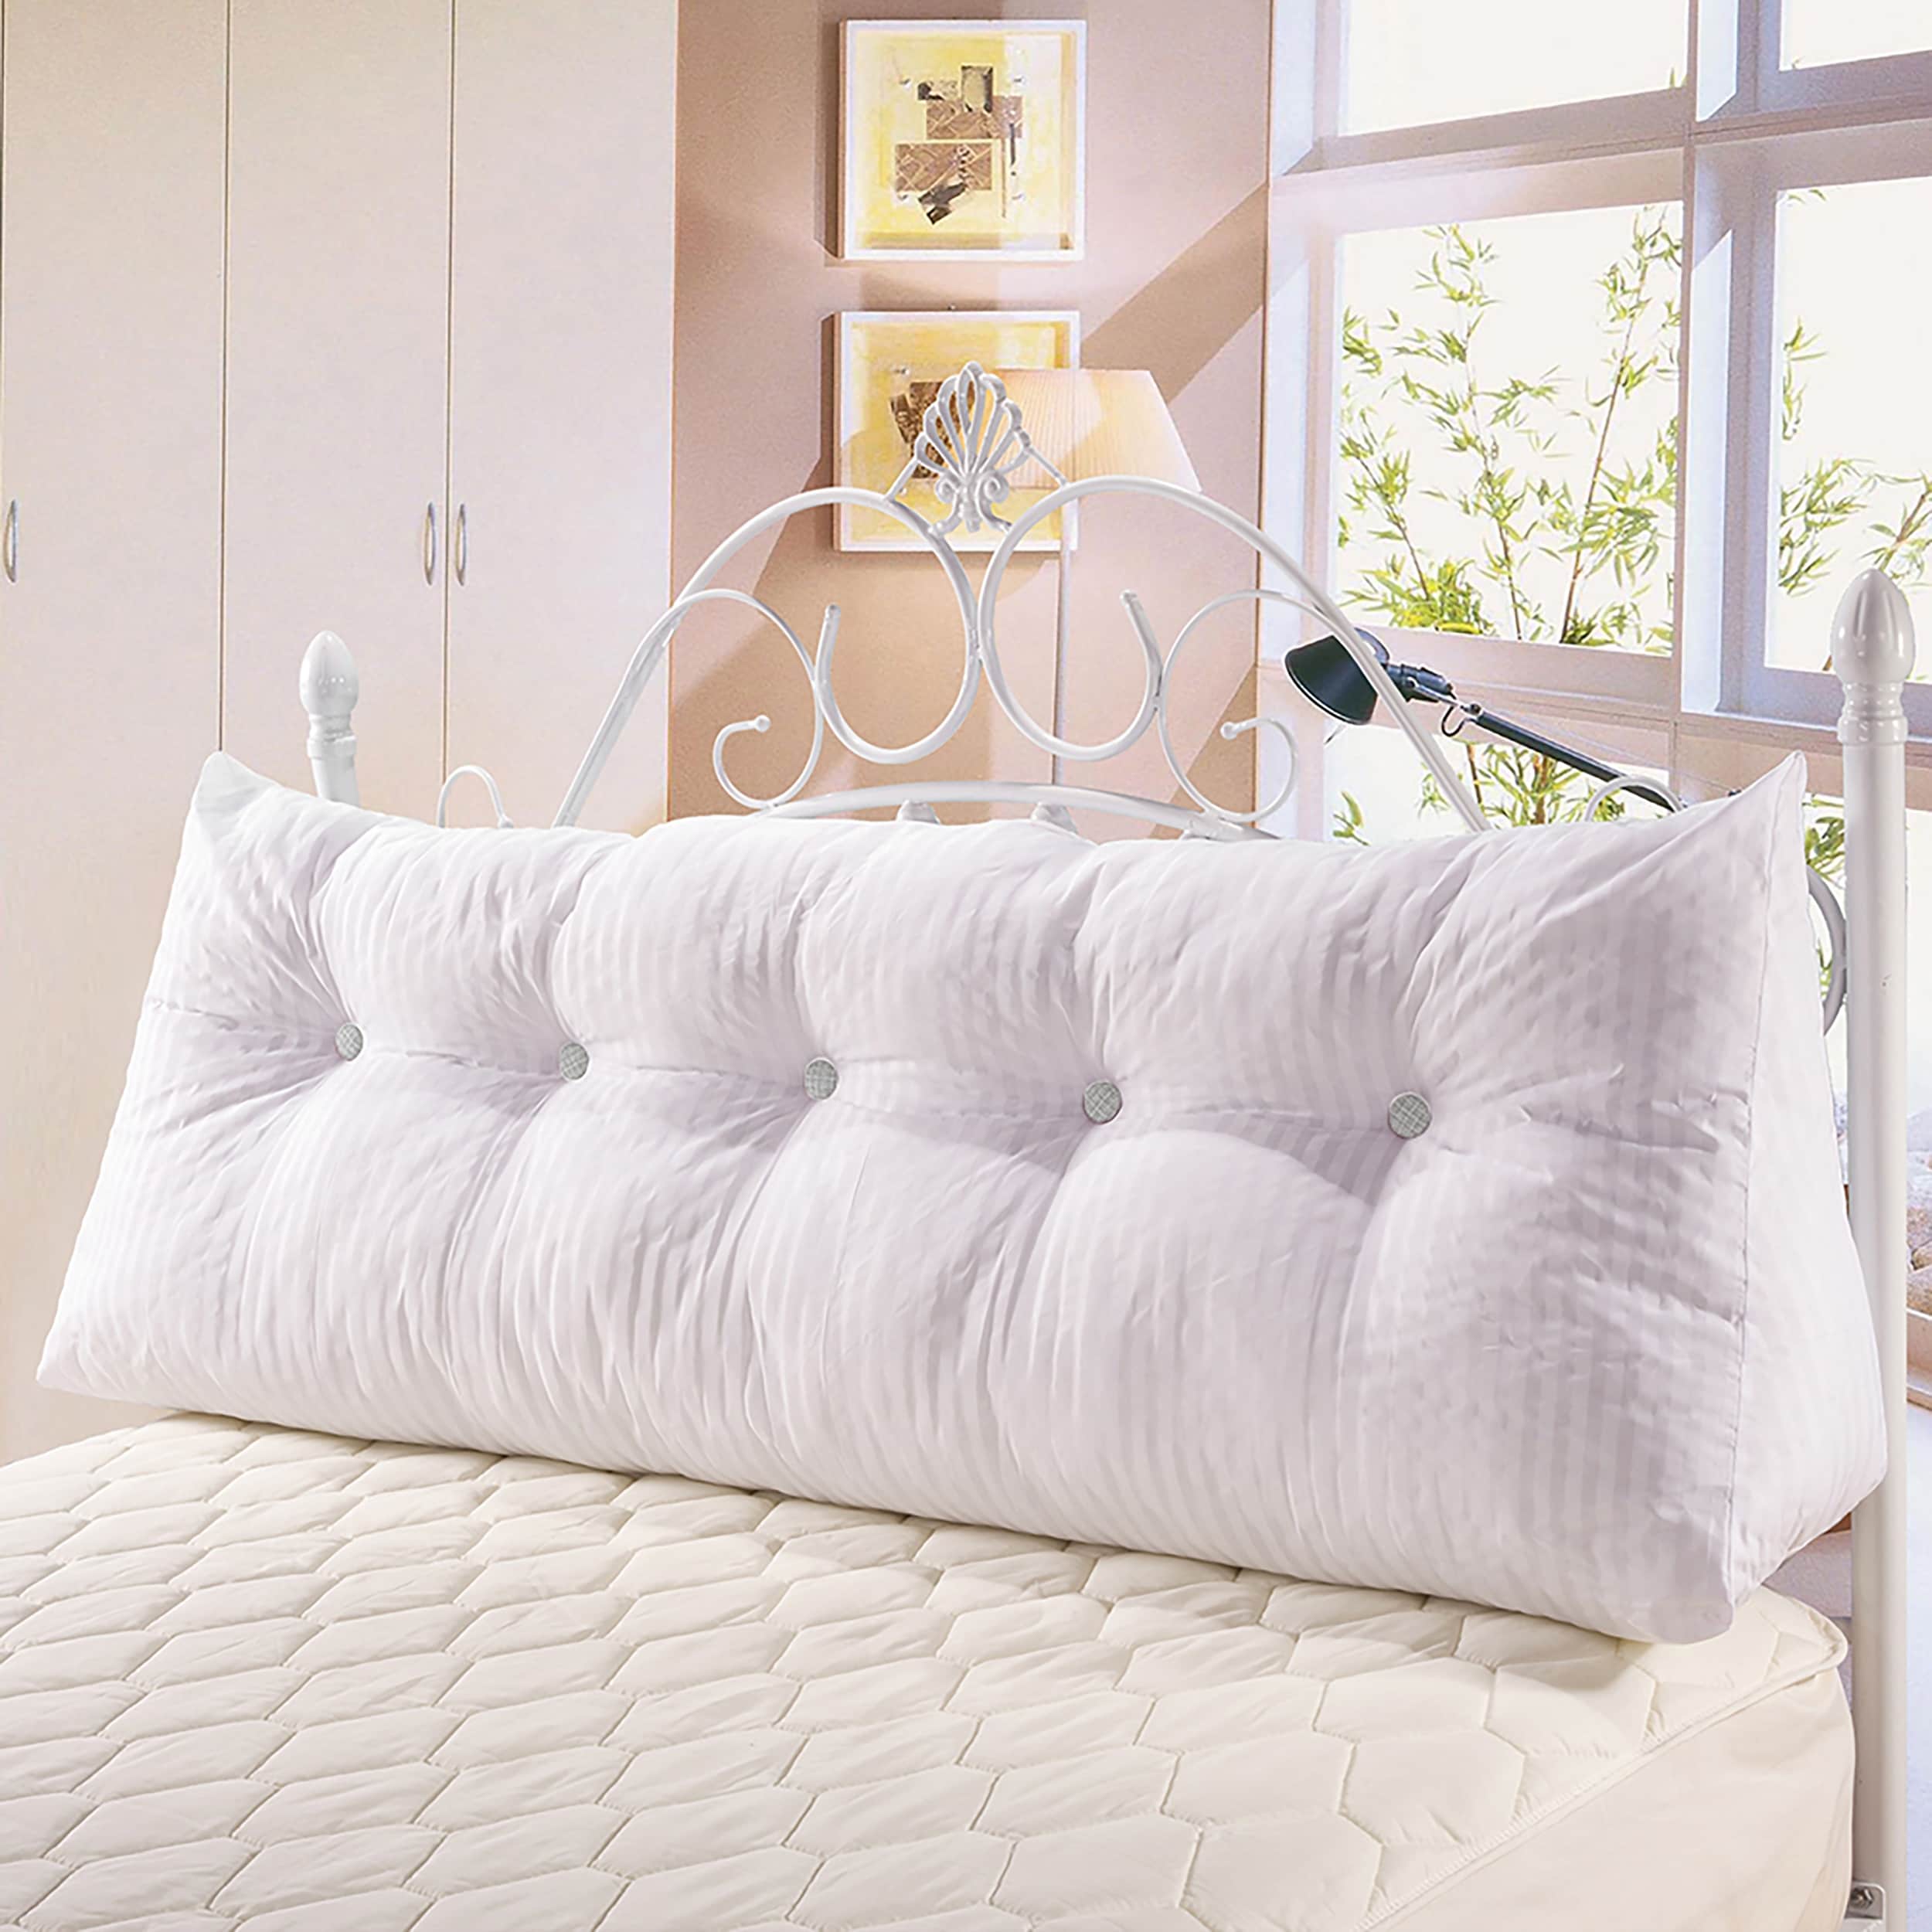 https://ak1.ostkcdn.com/images/products/is/images/direct/29326135c7e3b4181a5f3aa49ebbfe122e6d35c6/WOWMAX-Bed-Rest-Wedge-Bolster-Pillow-Decorative-Gray-Lumbar-Pillow.jpg